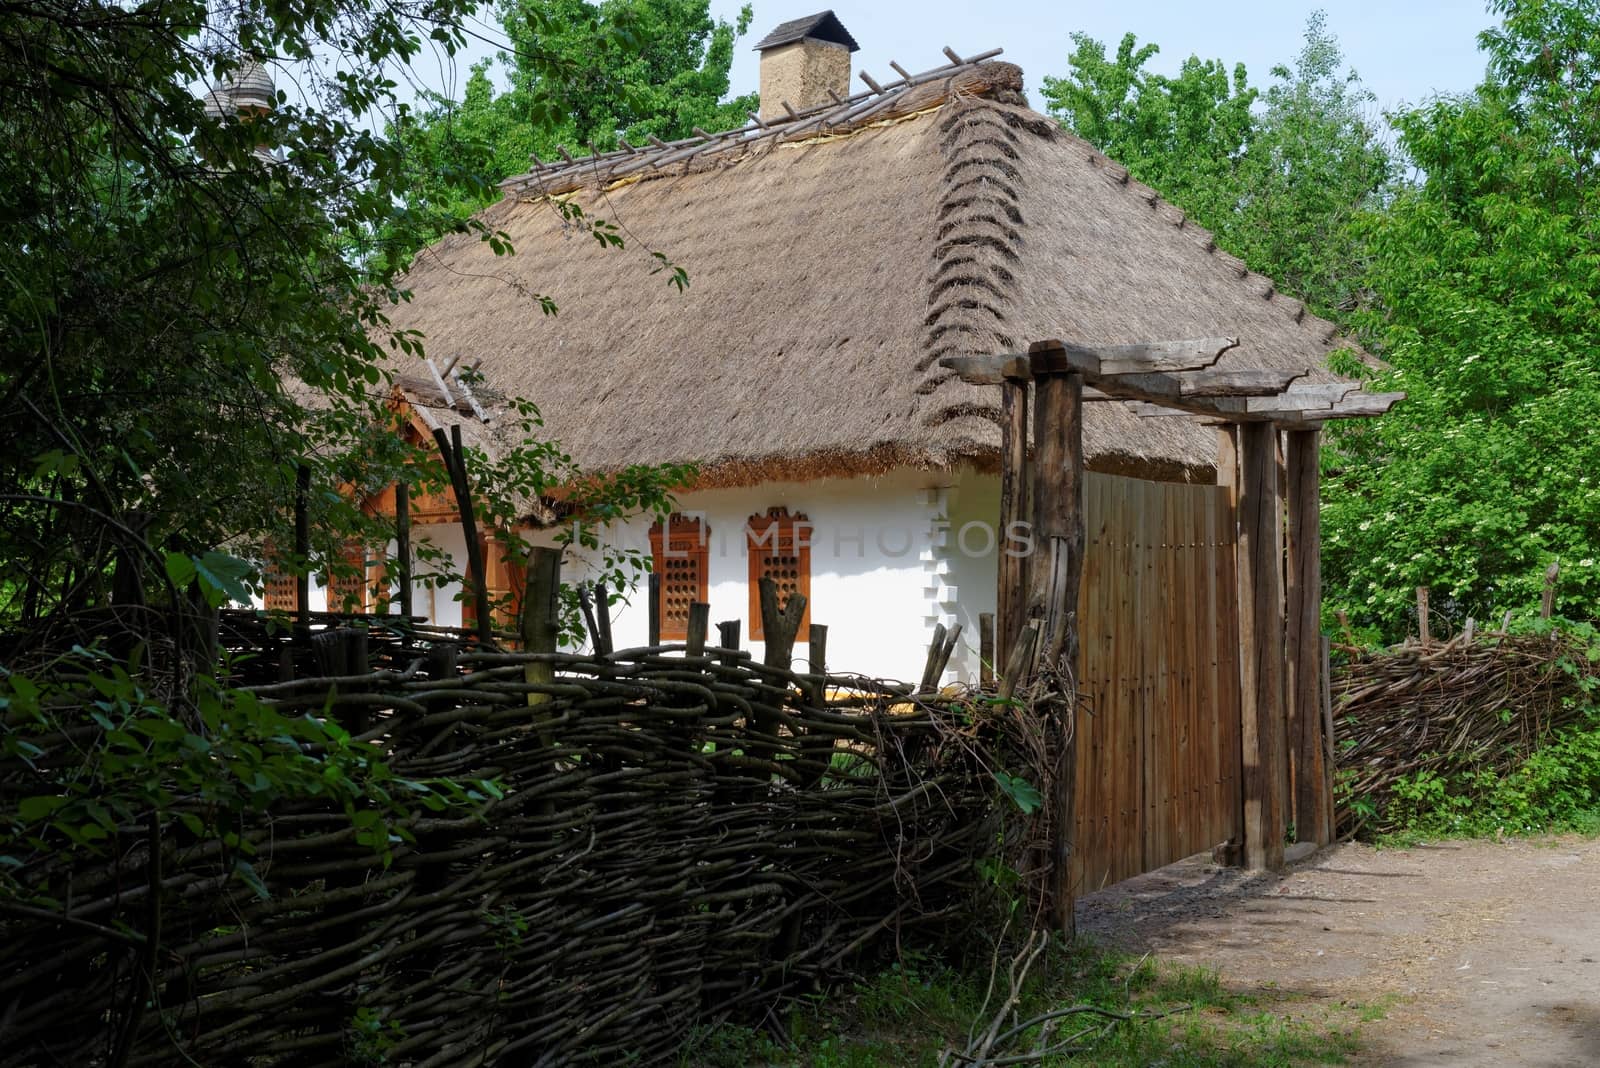 Farmer's house in open air museum, Kiev, Ukraine